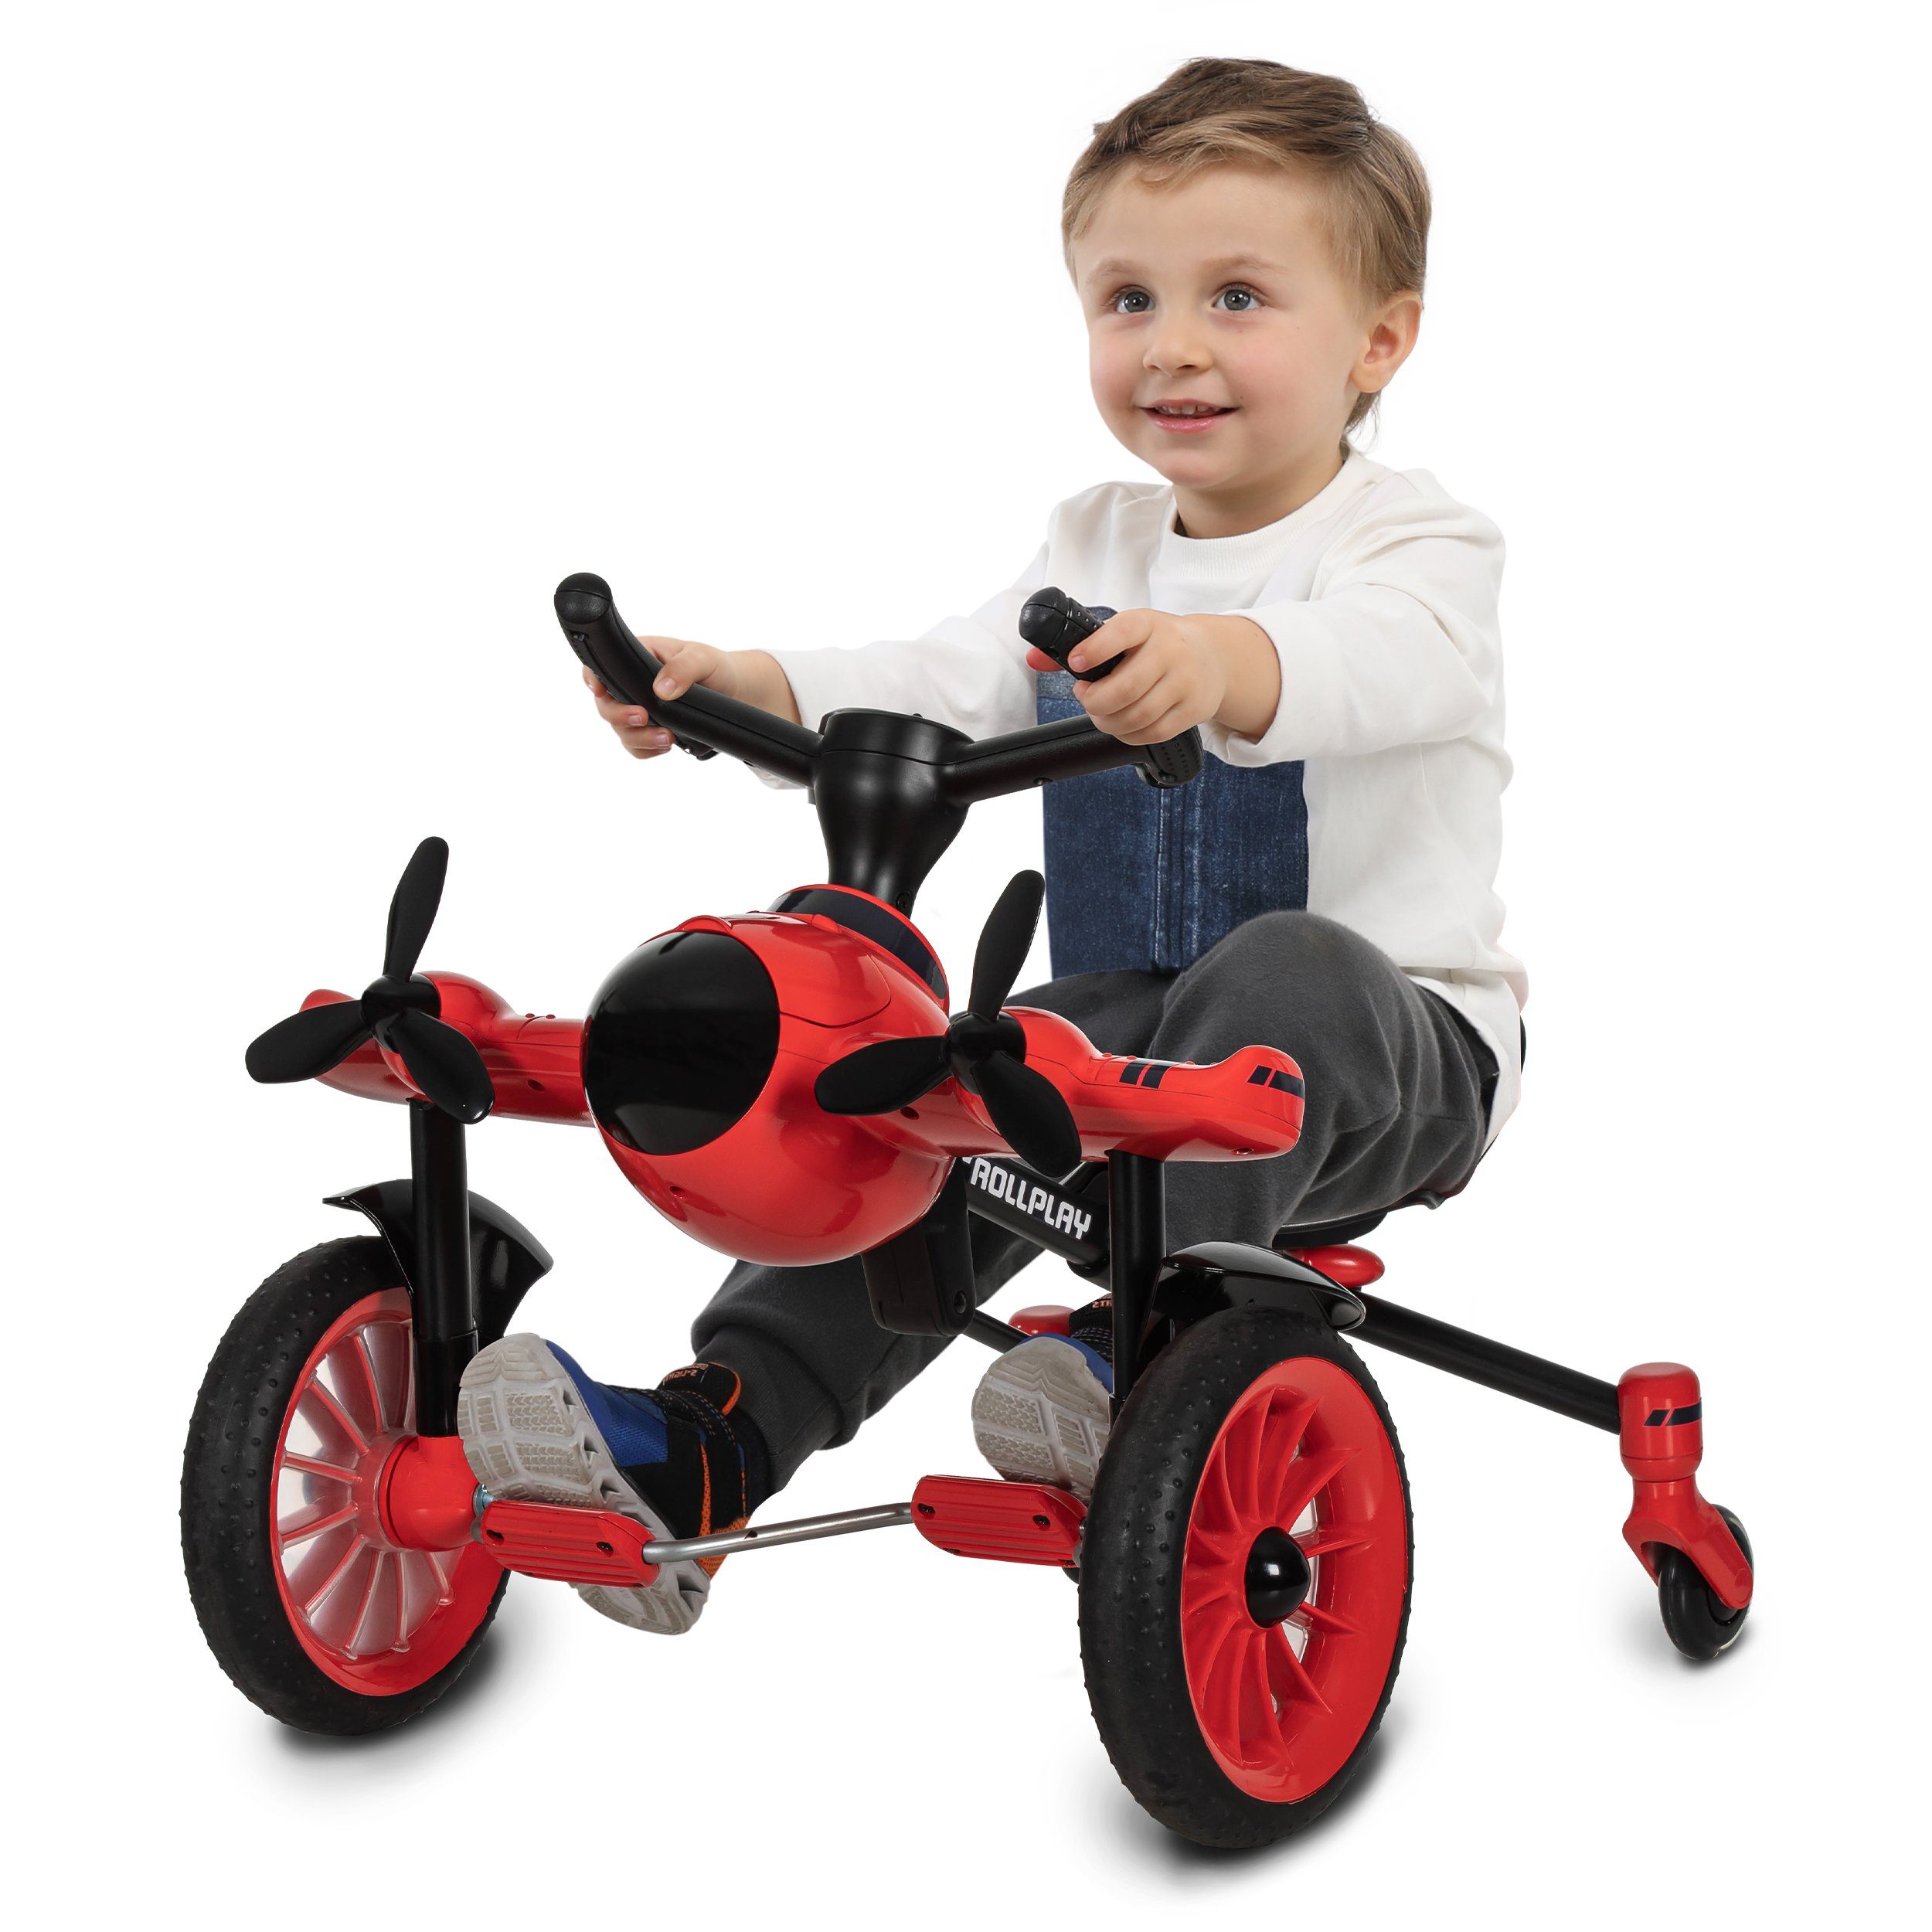 Rollplay Tretfahrzeug ROLLPLAY Flex Pedal Drifter Kinderfahrzeug / Tretfahrzeug | Go-Karts & Tretfahrzeuge